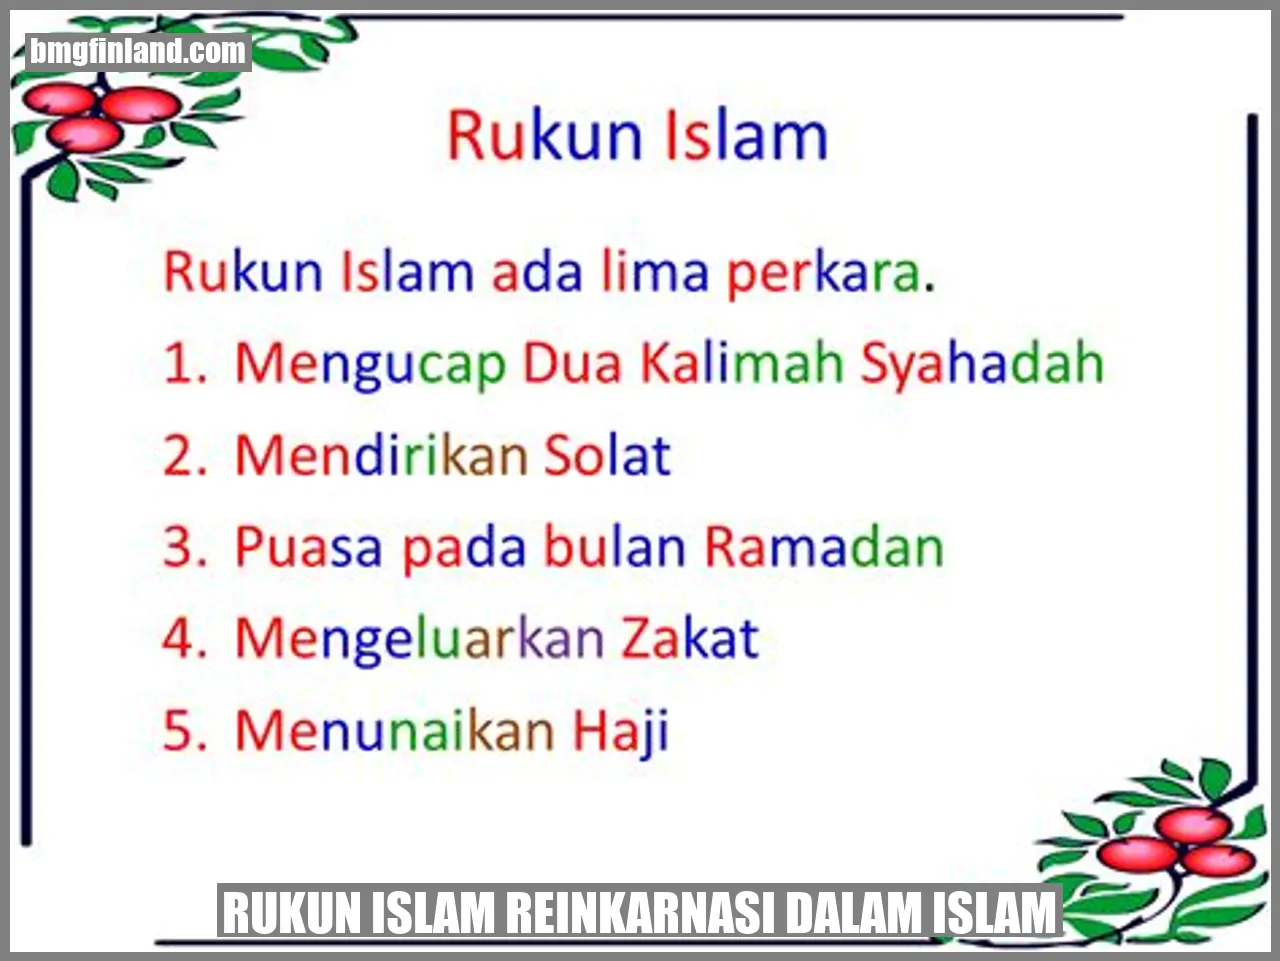 Rukun Islam reinkarnasi dalam Islam